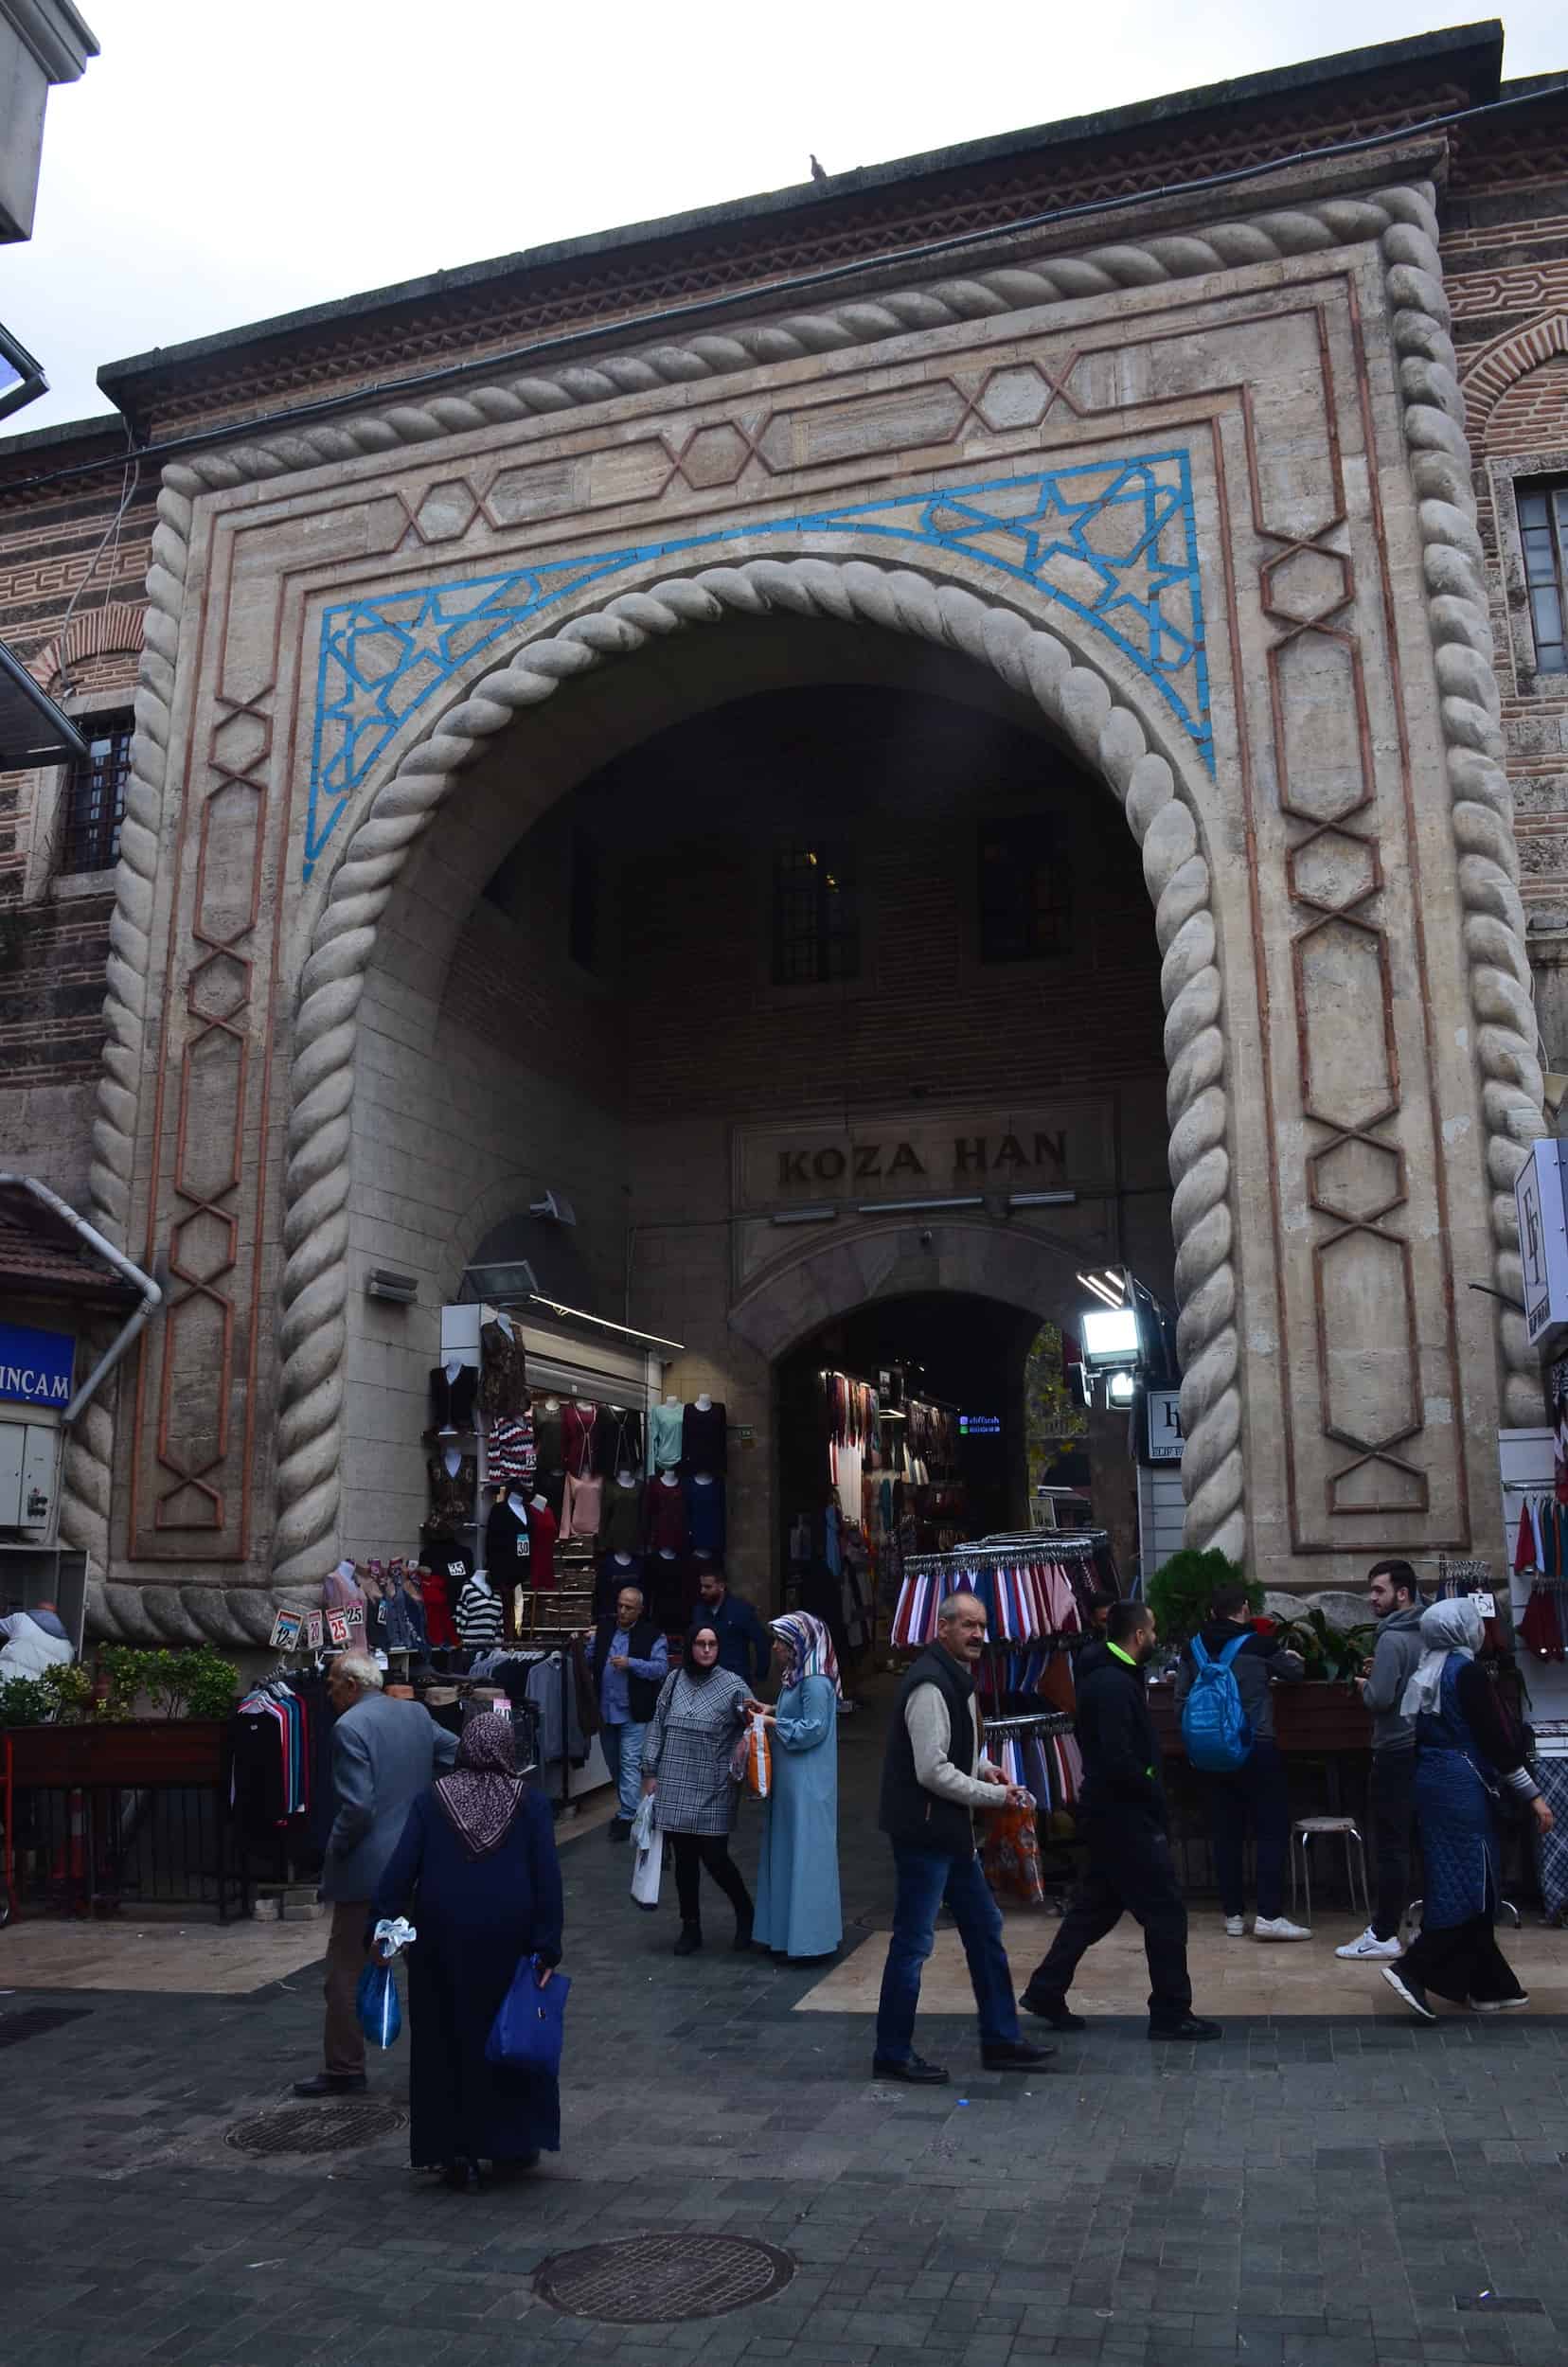 Main entrance to Koza Han in Bursa, Turkey